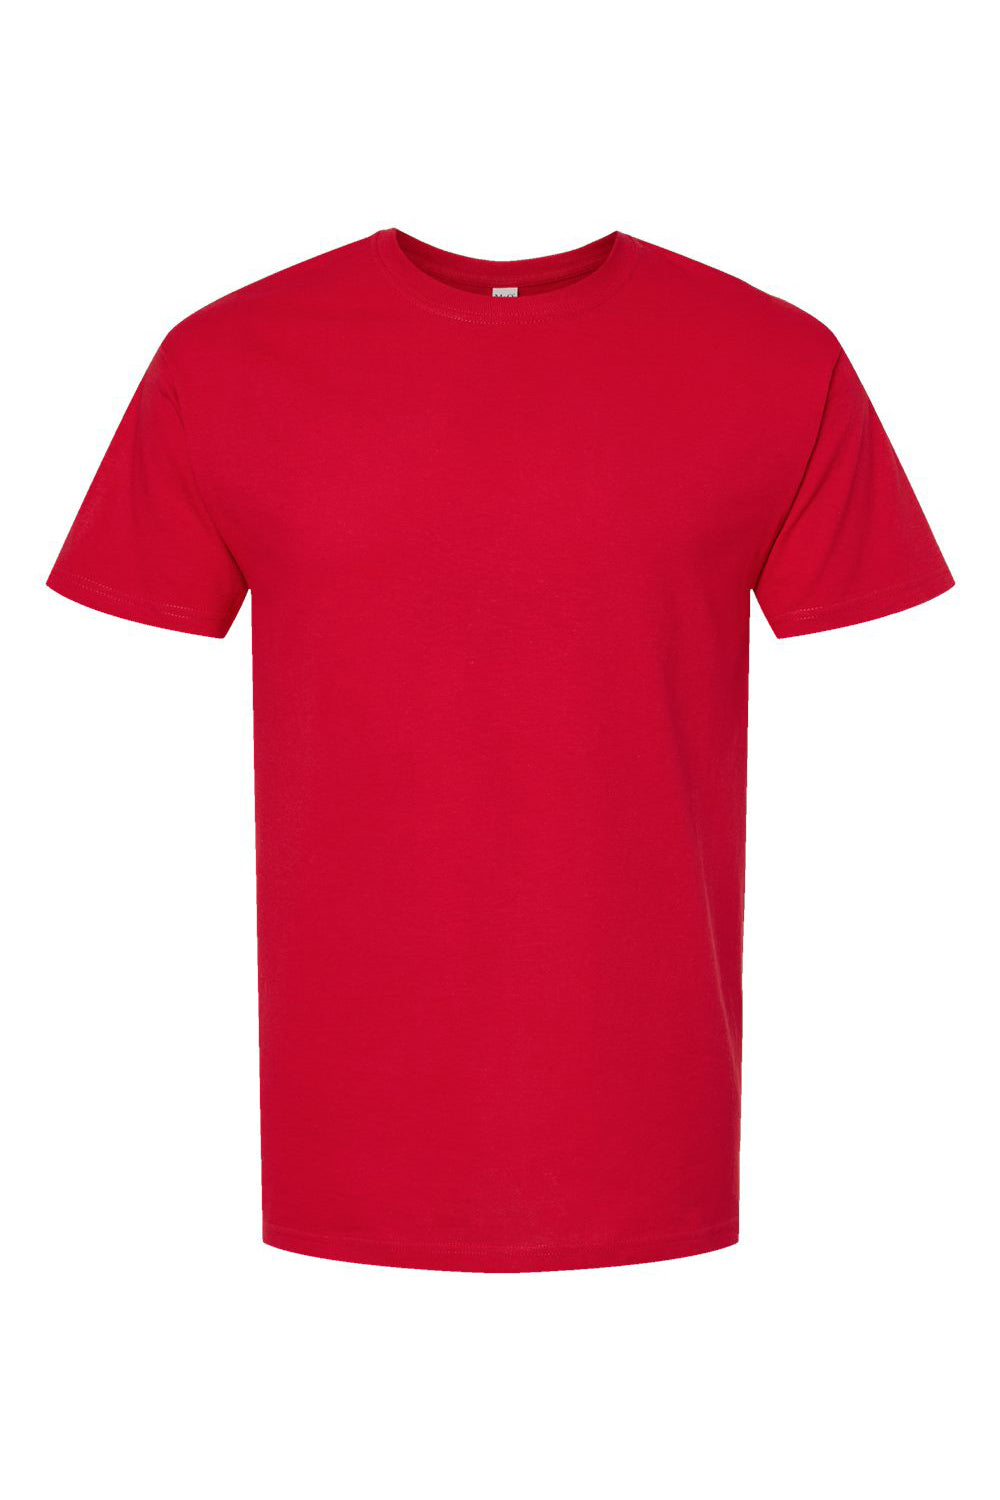 M&O 4800 Mens Gold Soft Touch Short Sleeve Crewneck T-Shirt Deep Red Flat Front